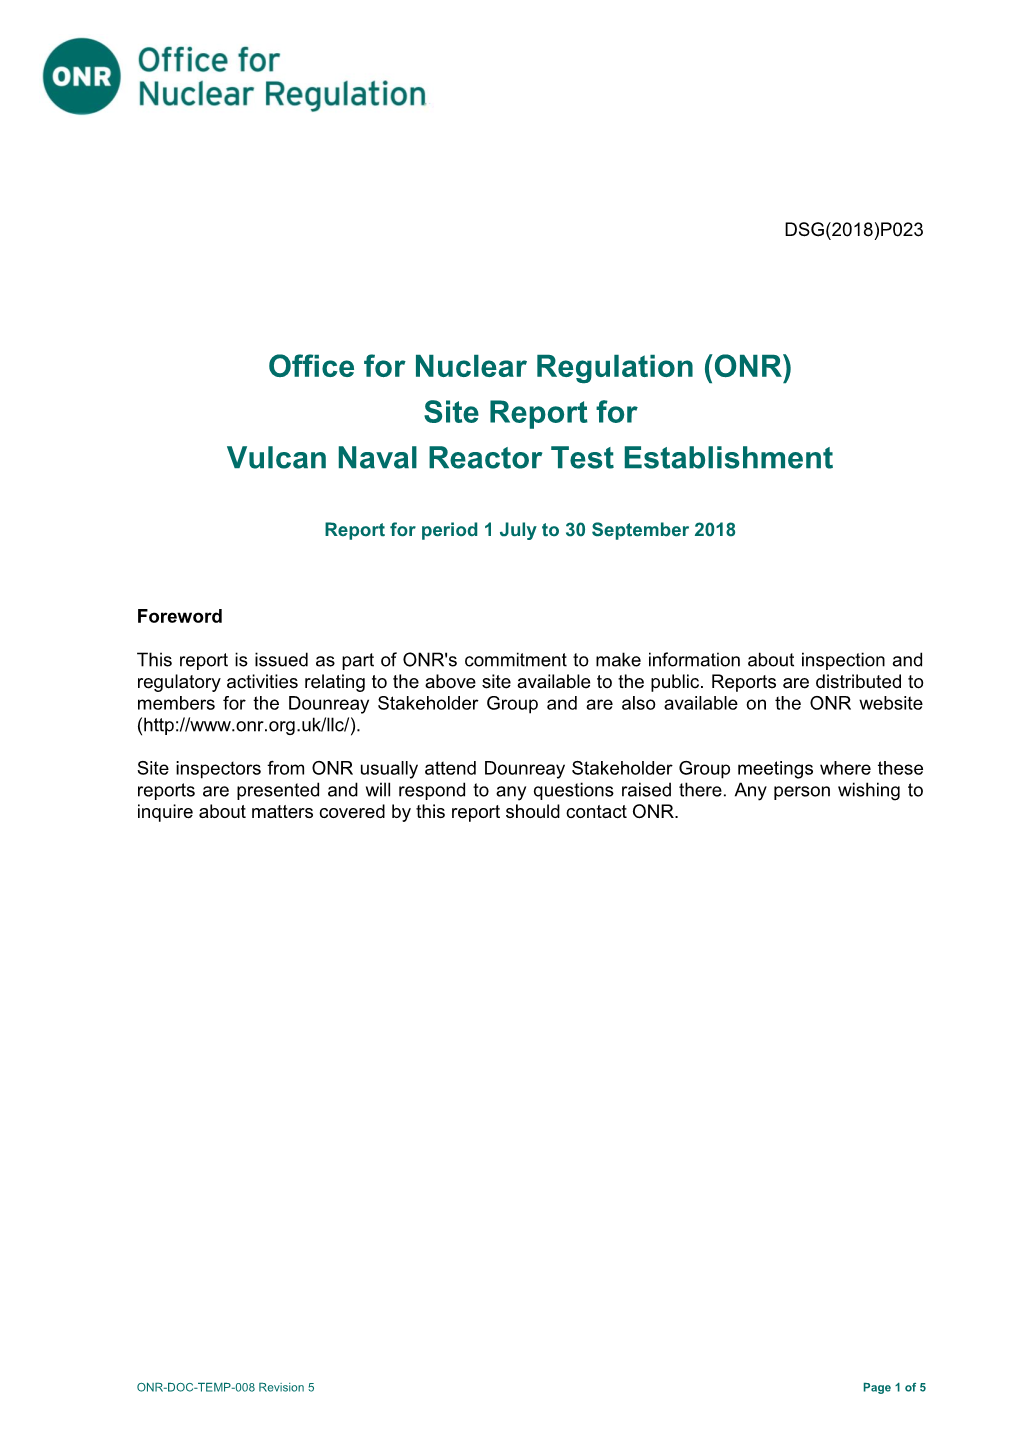 Office for Nuclear Regulation (ONR) Site Report for Vulcan Naval Reactor Test Establishment